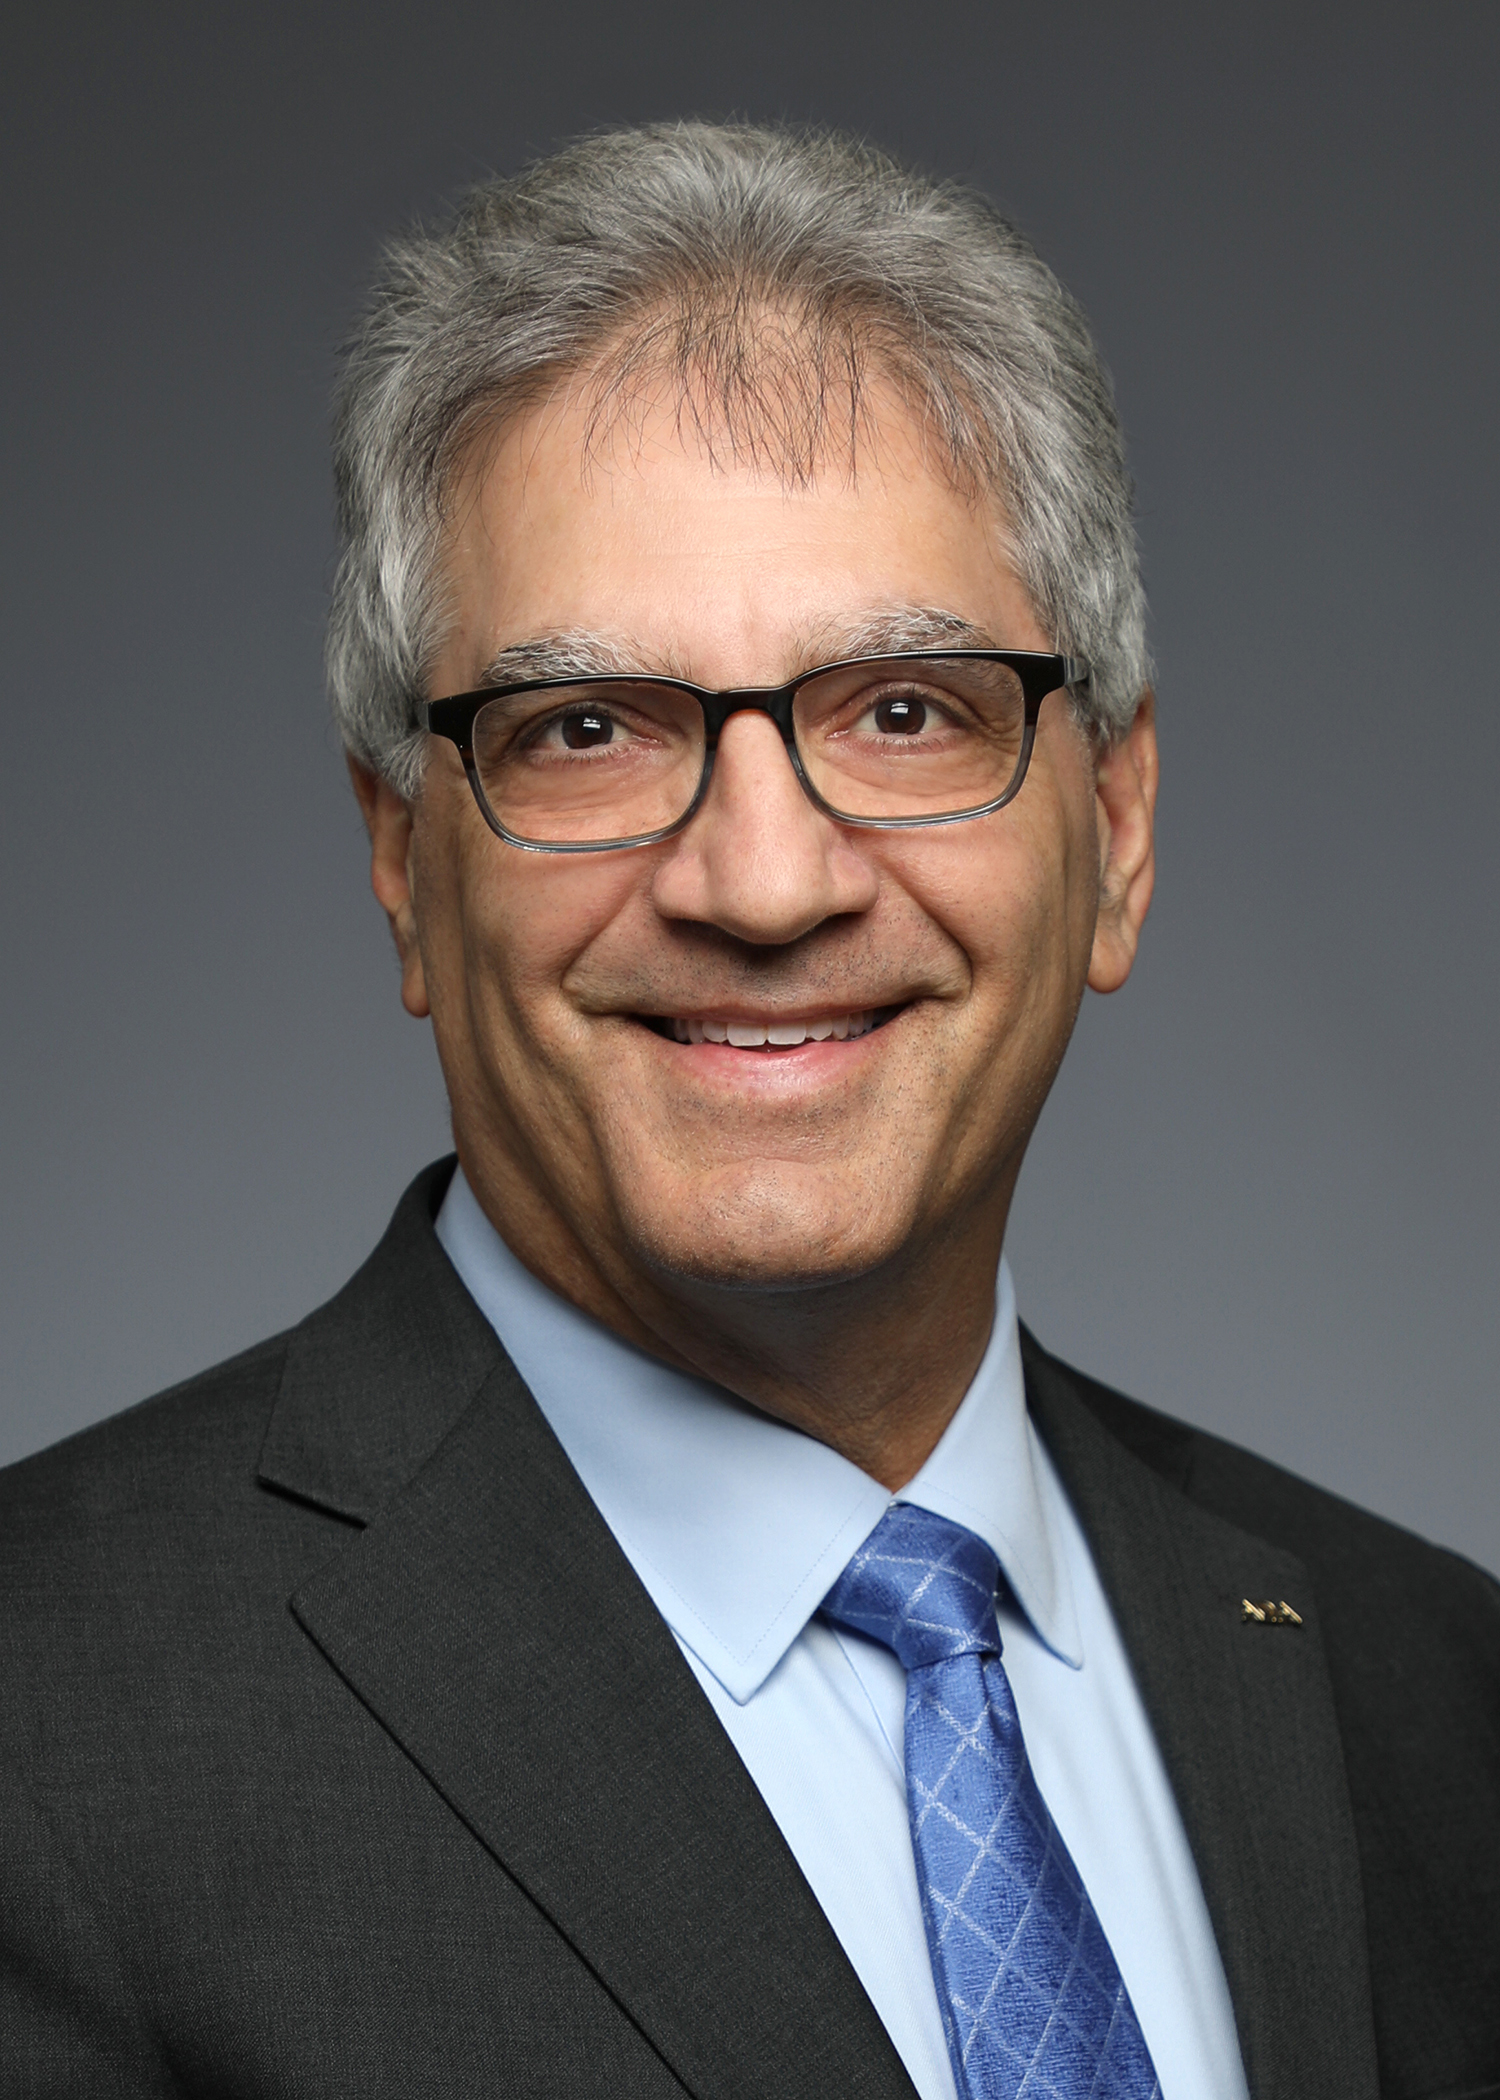 Raymond A. Cohlmia, D.D.S. Secretary and Executive Director of the American Dental Association